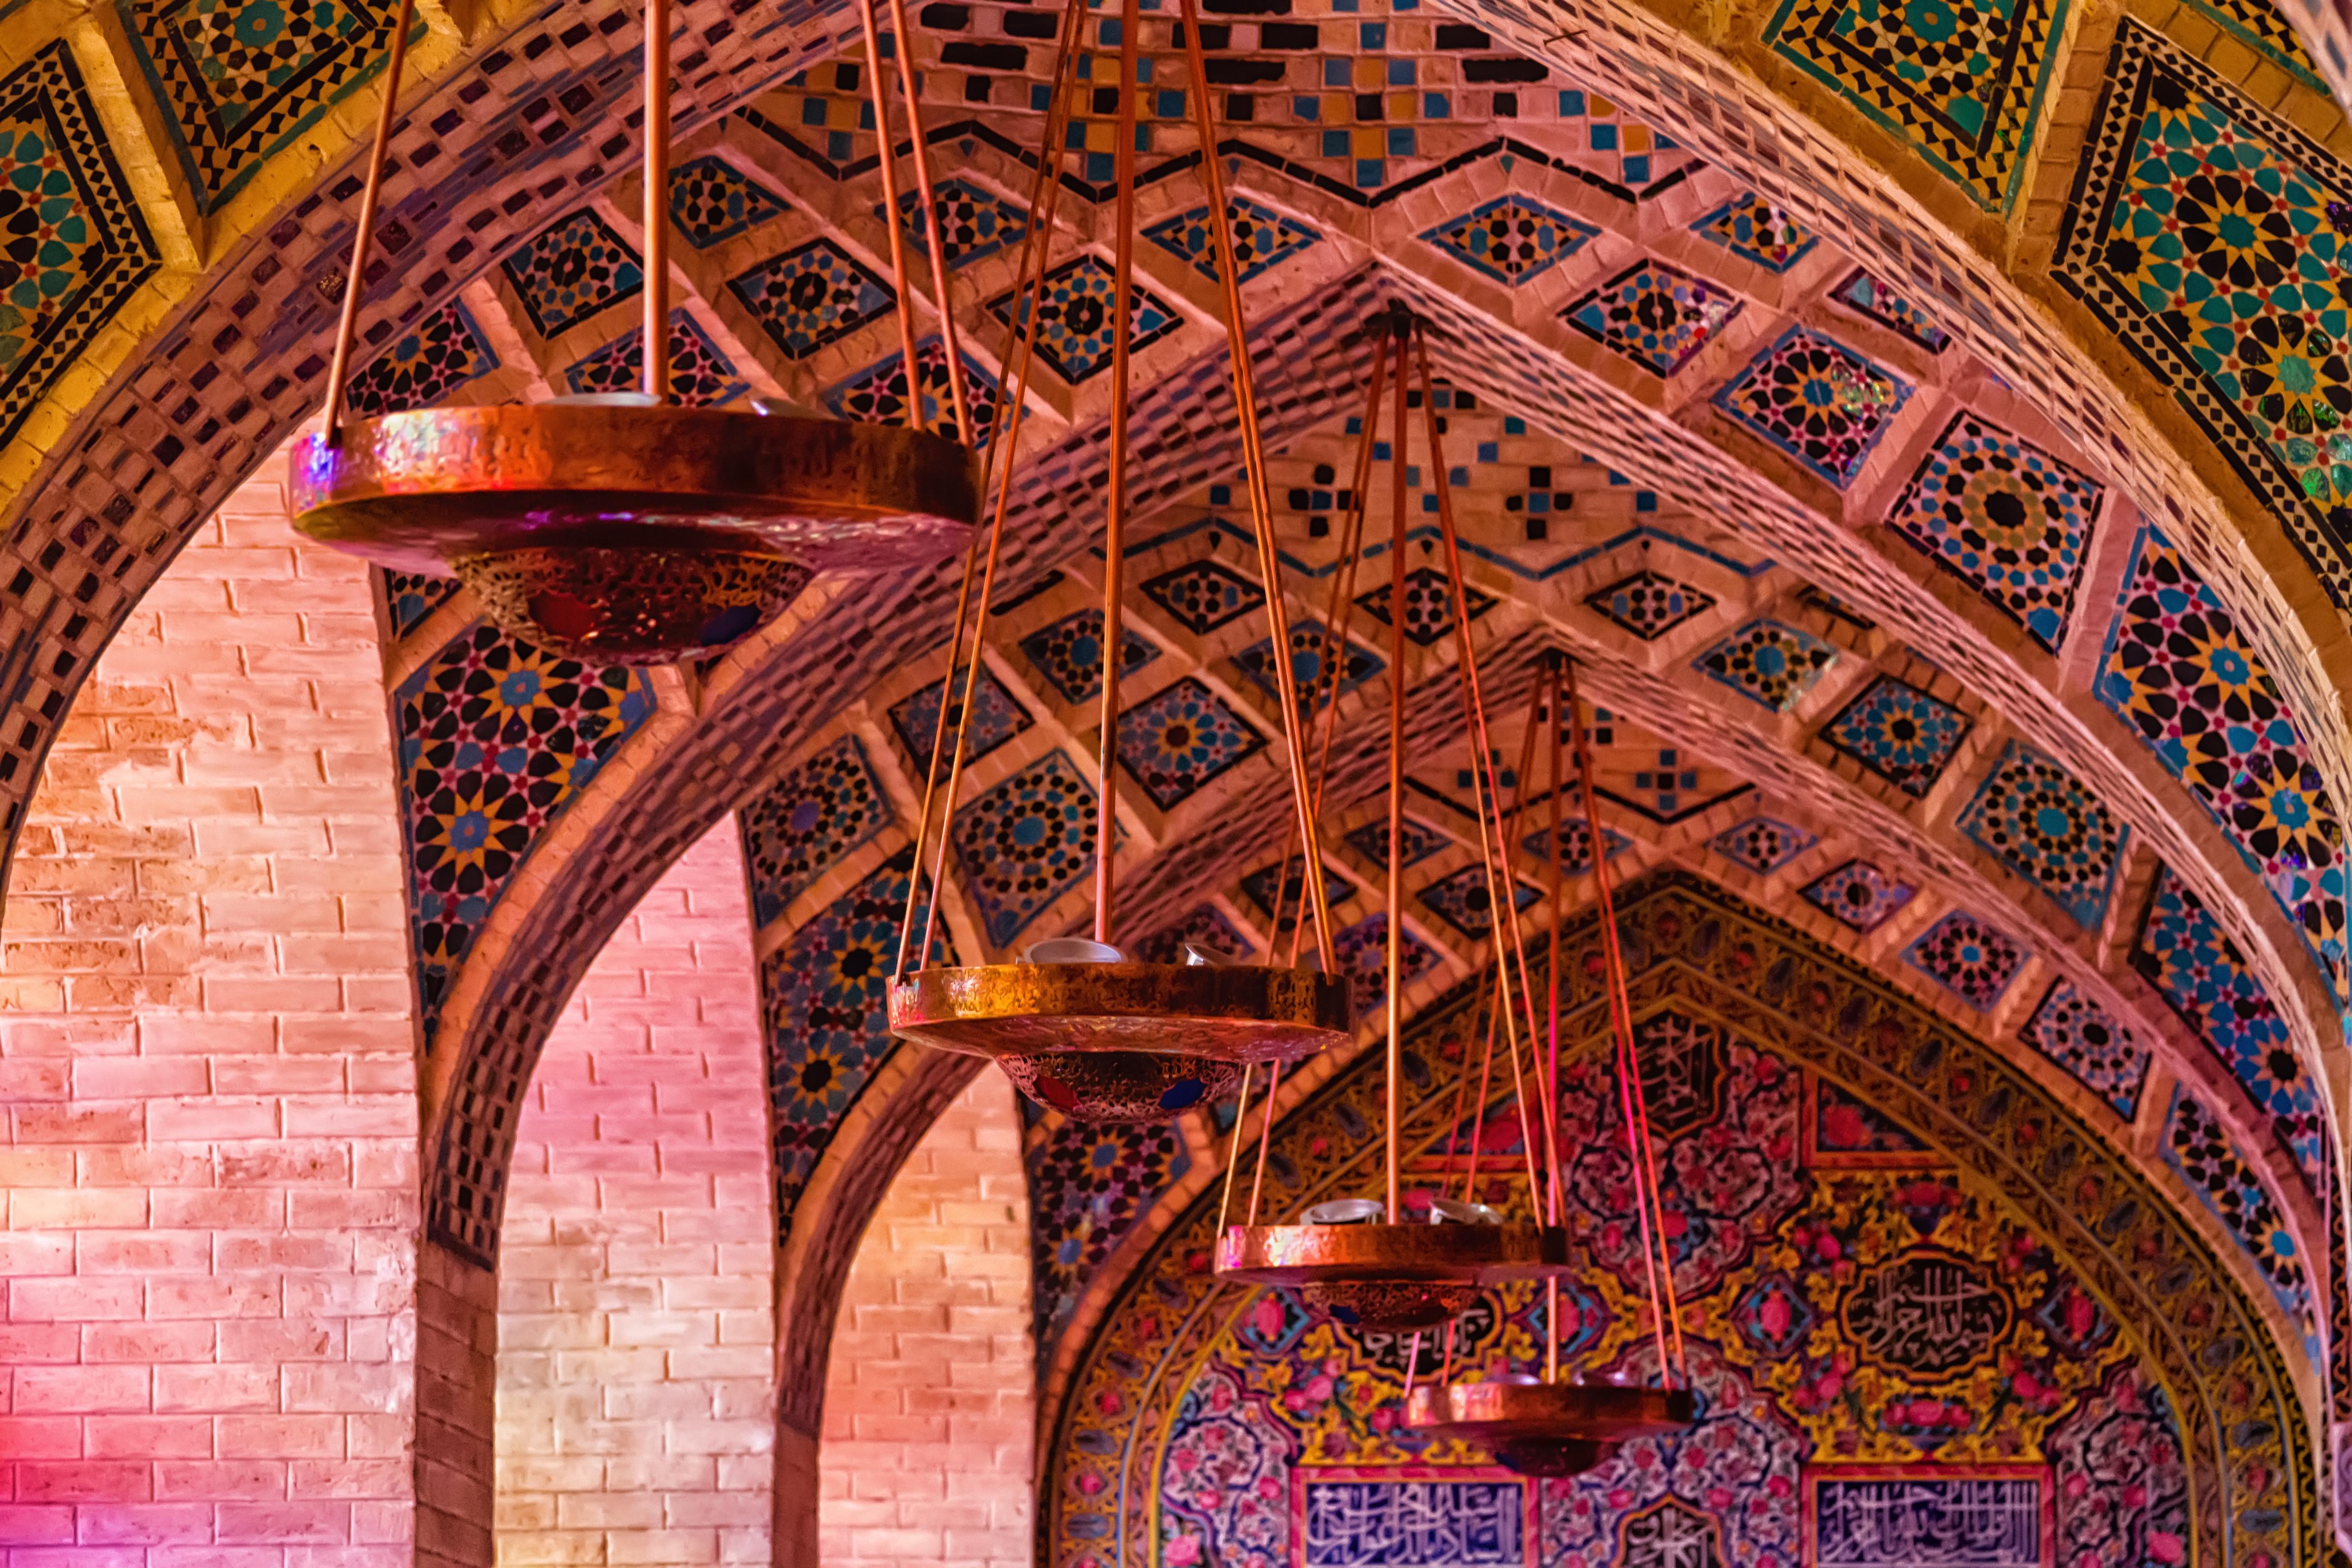 Interior of the pink mosque © Milosz Maslanka / Shutterstock